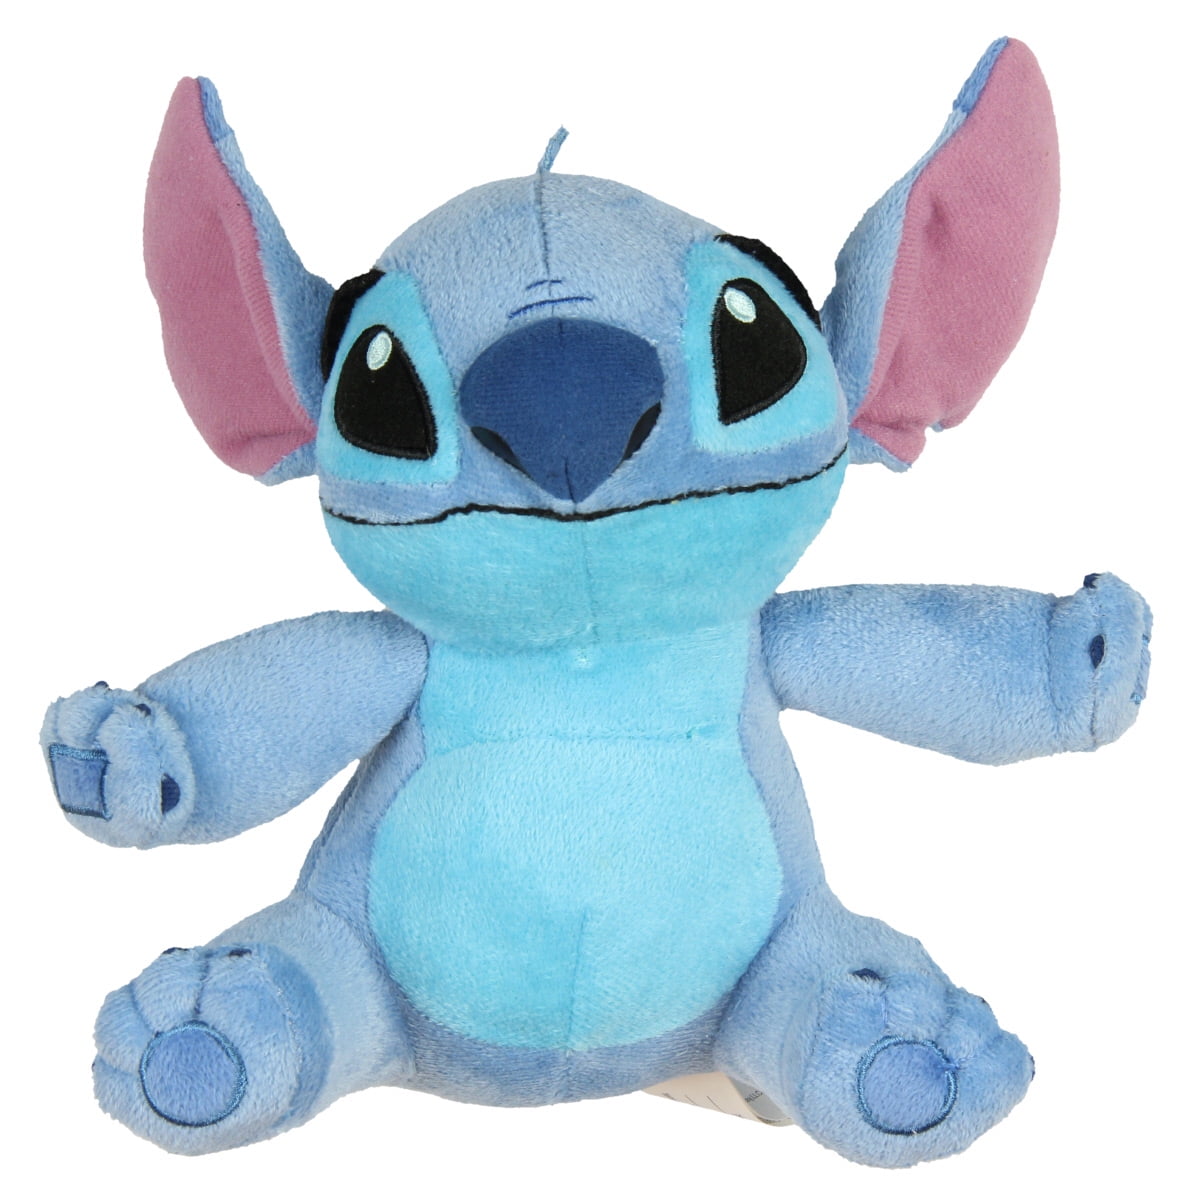 Disney Plush - Stitch - Lilo and Stitch - 25 Inch